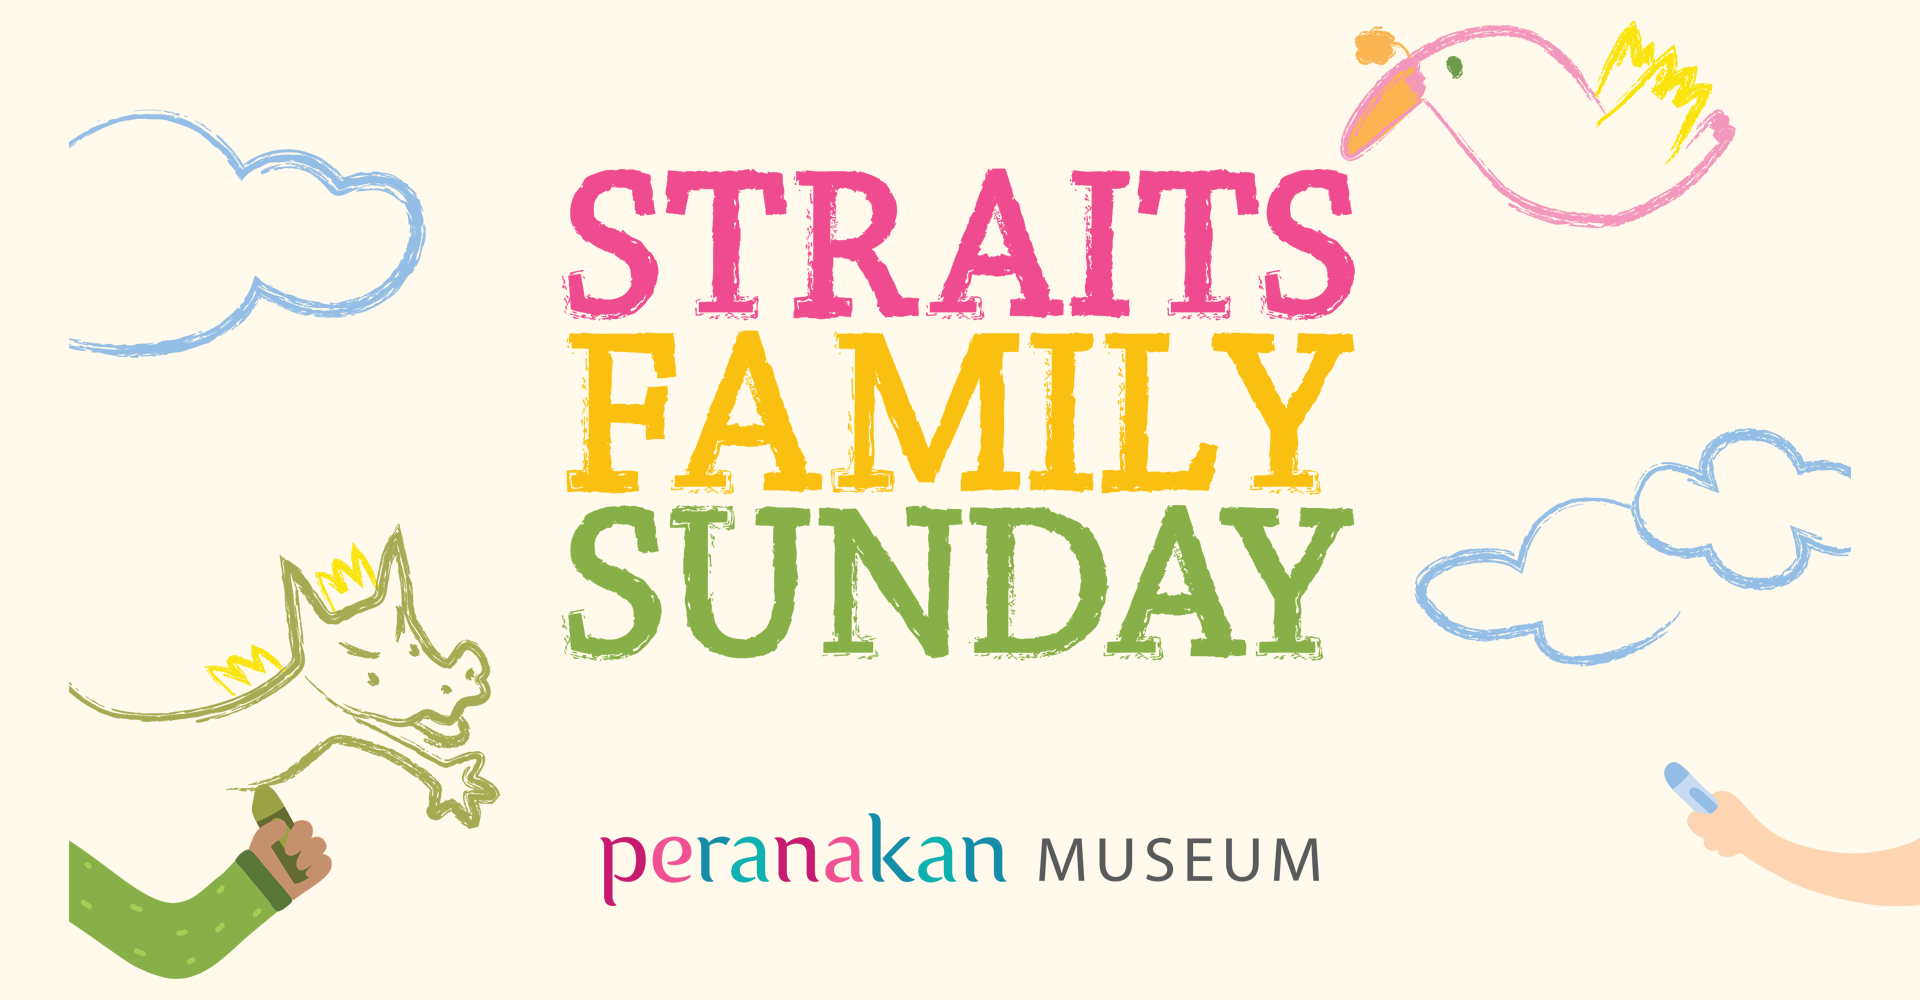 Straits Family Sunday - Image courtesy of the Peranakan Museum